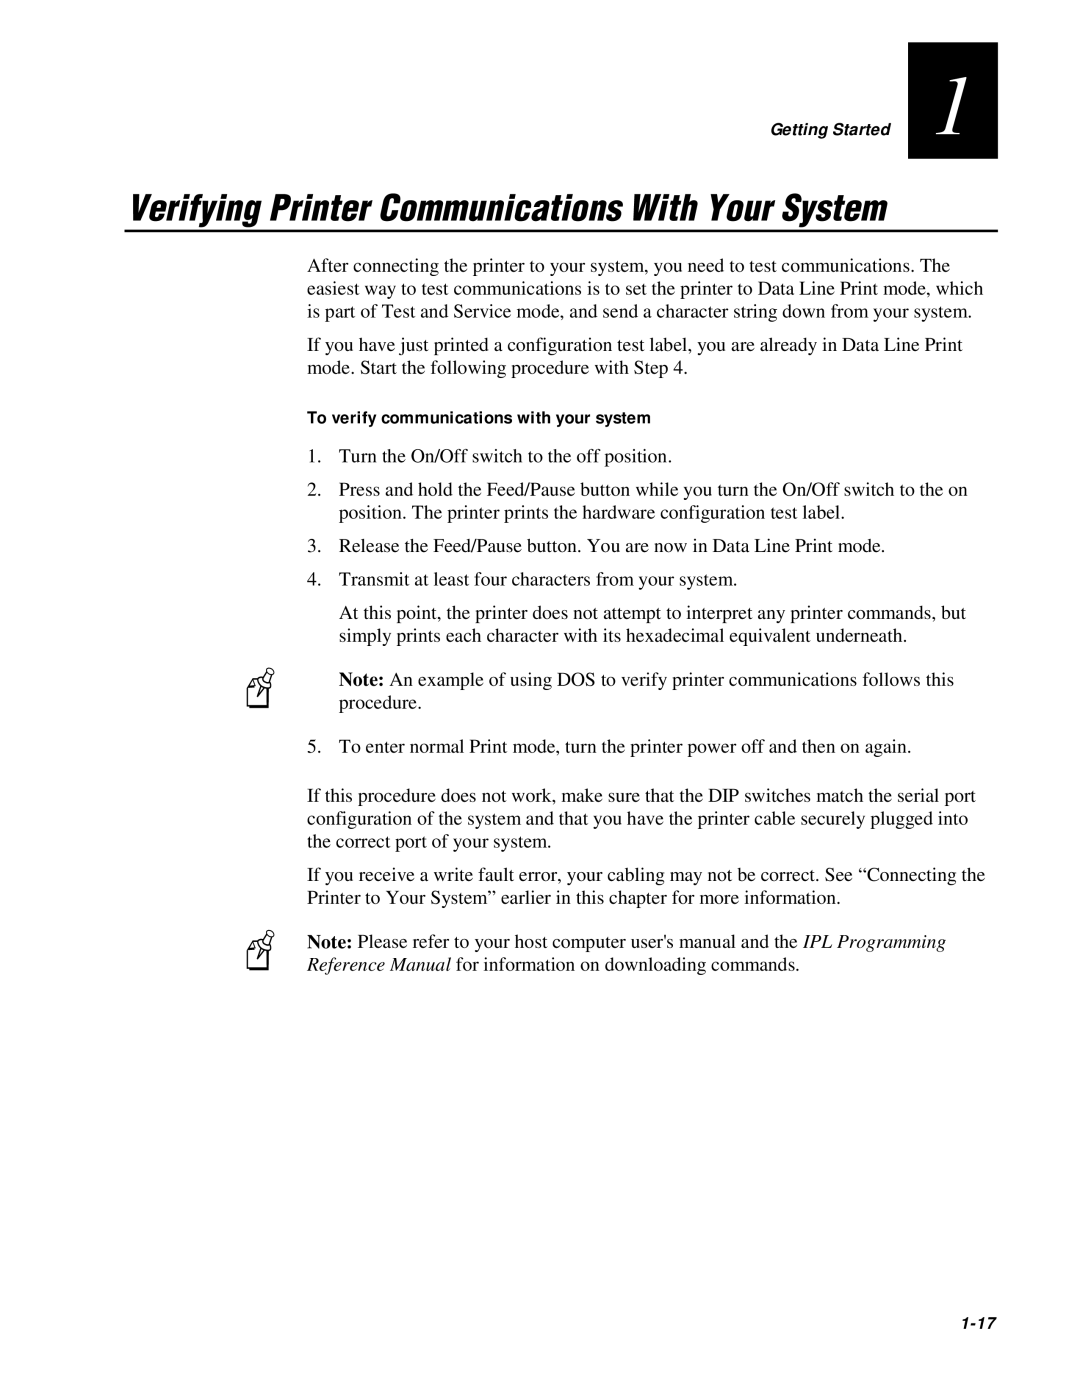 IBM EasyCoder 3400e Verifying Printer Communications With Your System, To verify communications with your system, 1-17 